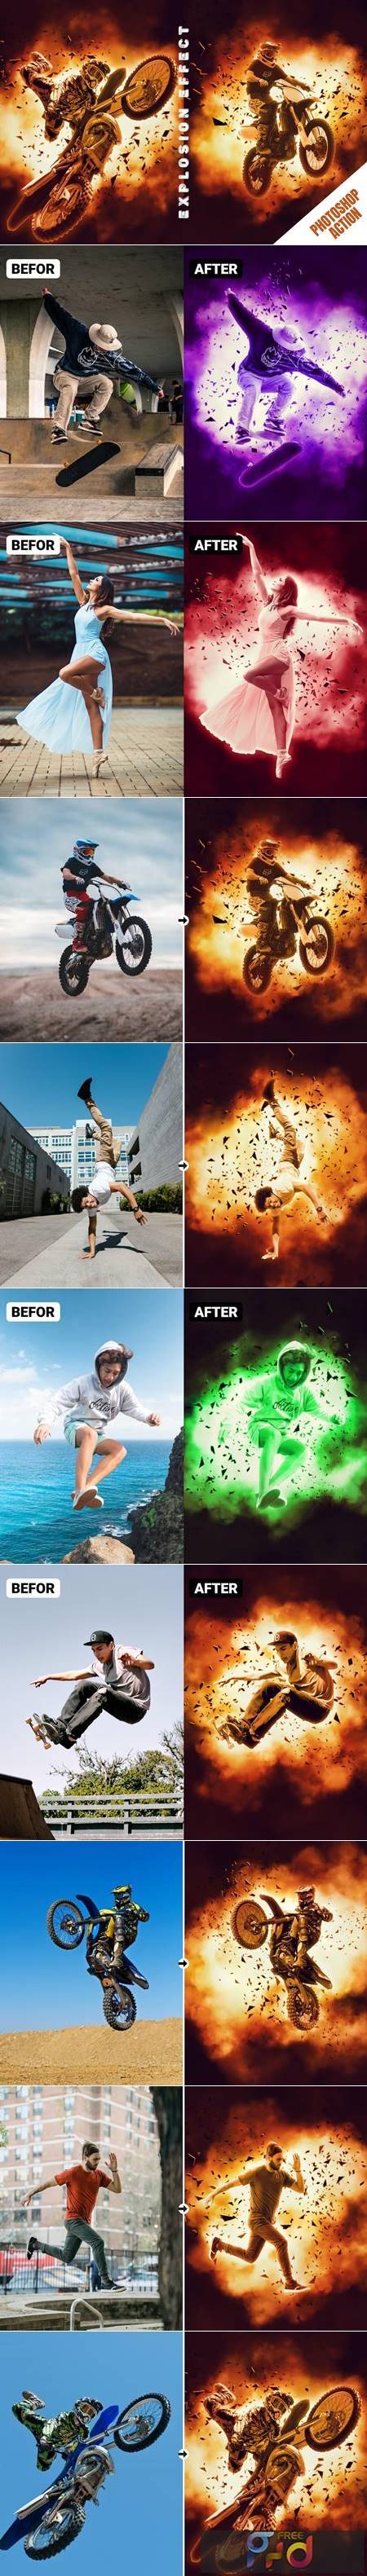 Explosion Effect Photoshop Action 8HAAVA5 1